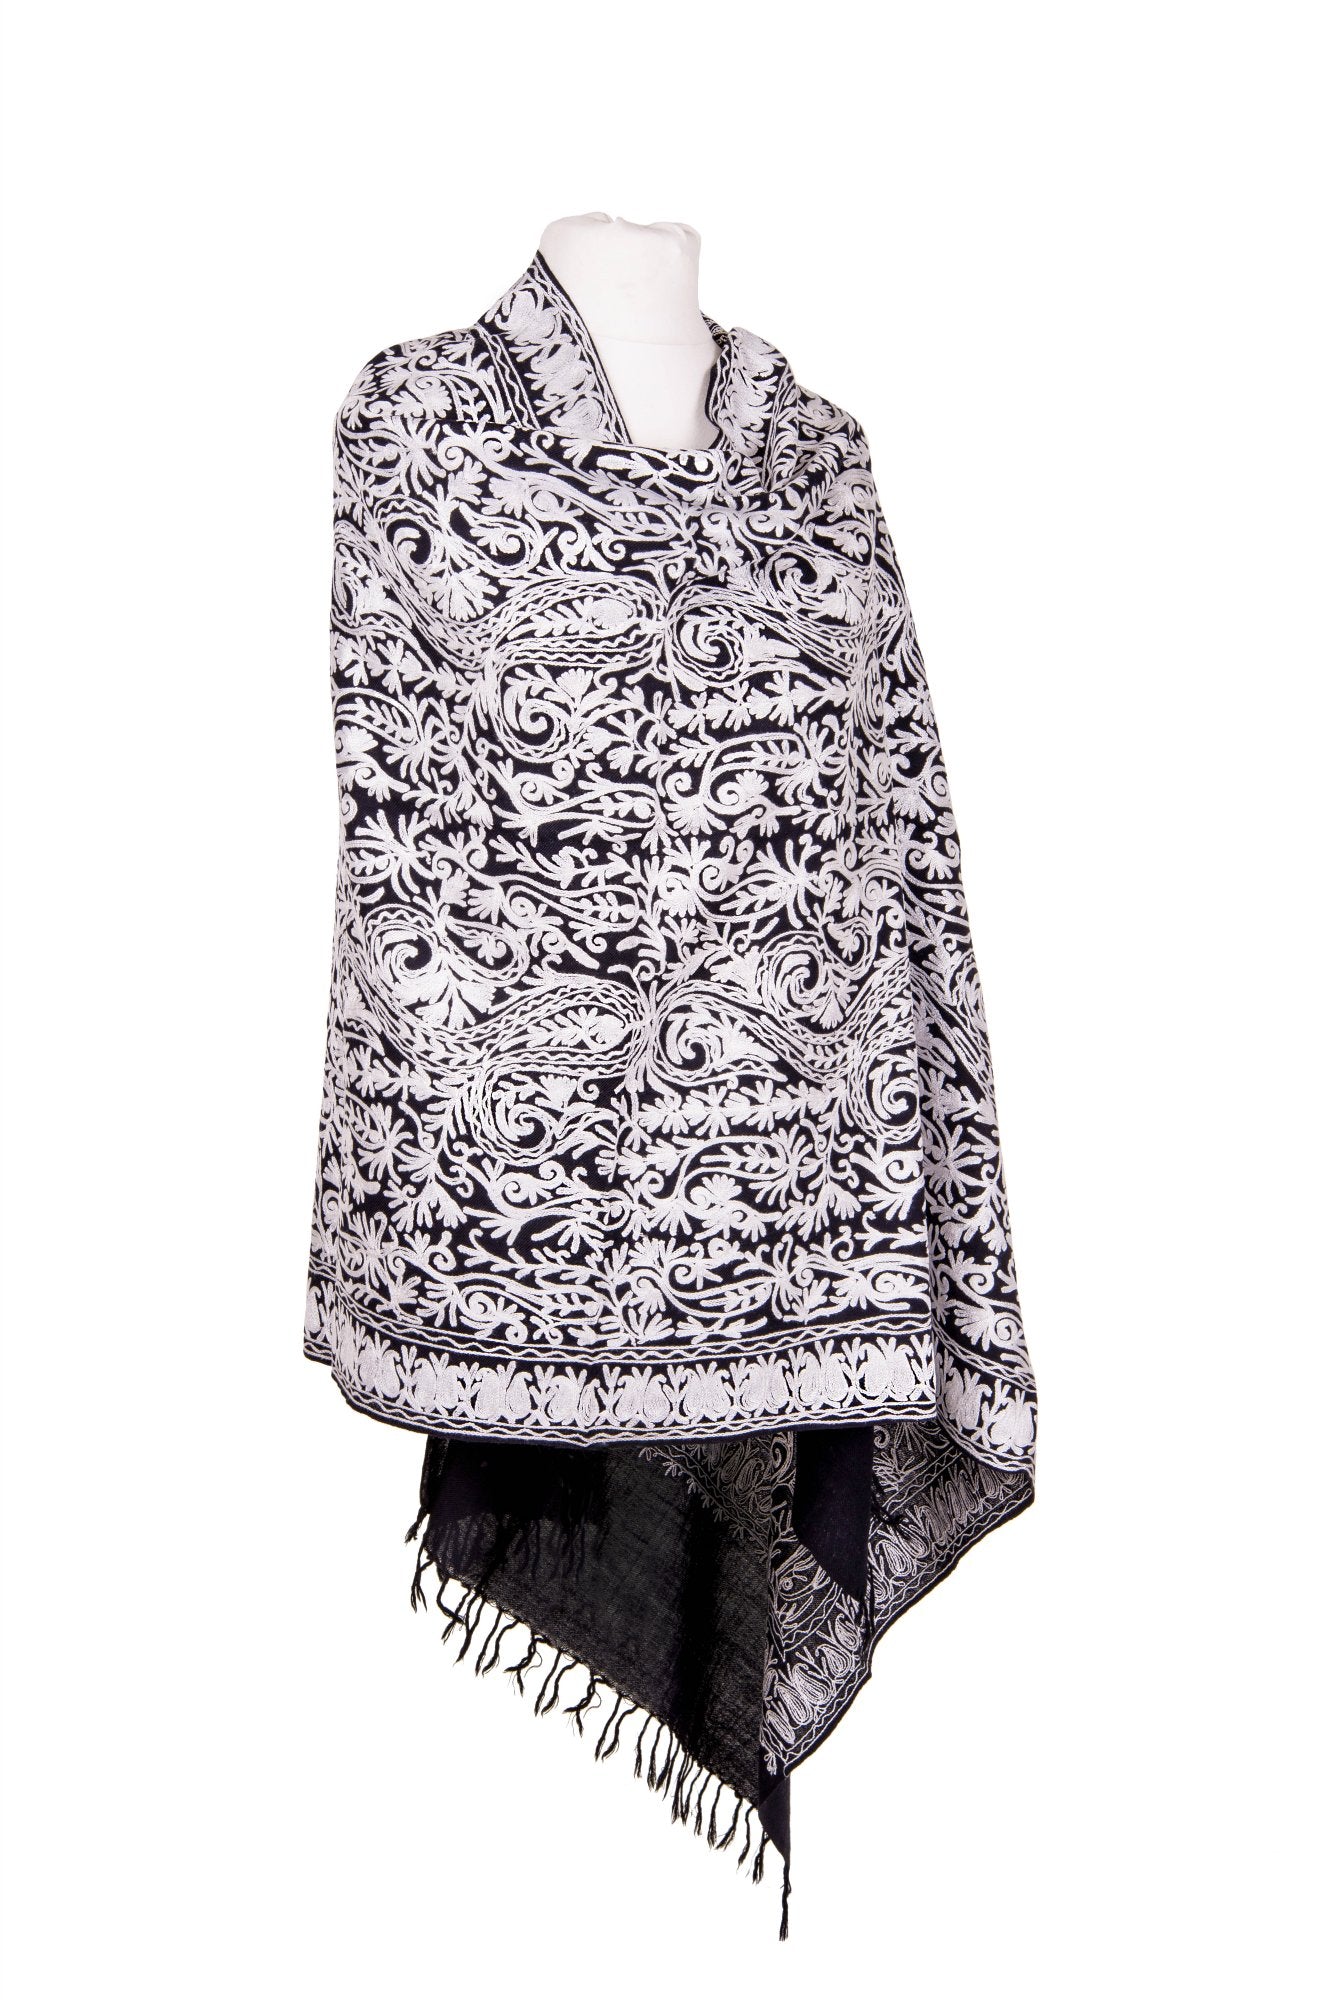 Black & White Paisley Woollen shawl